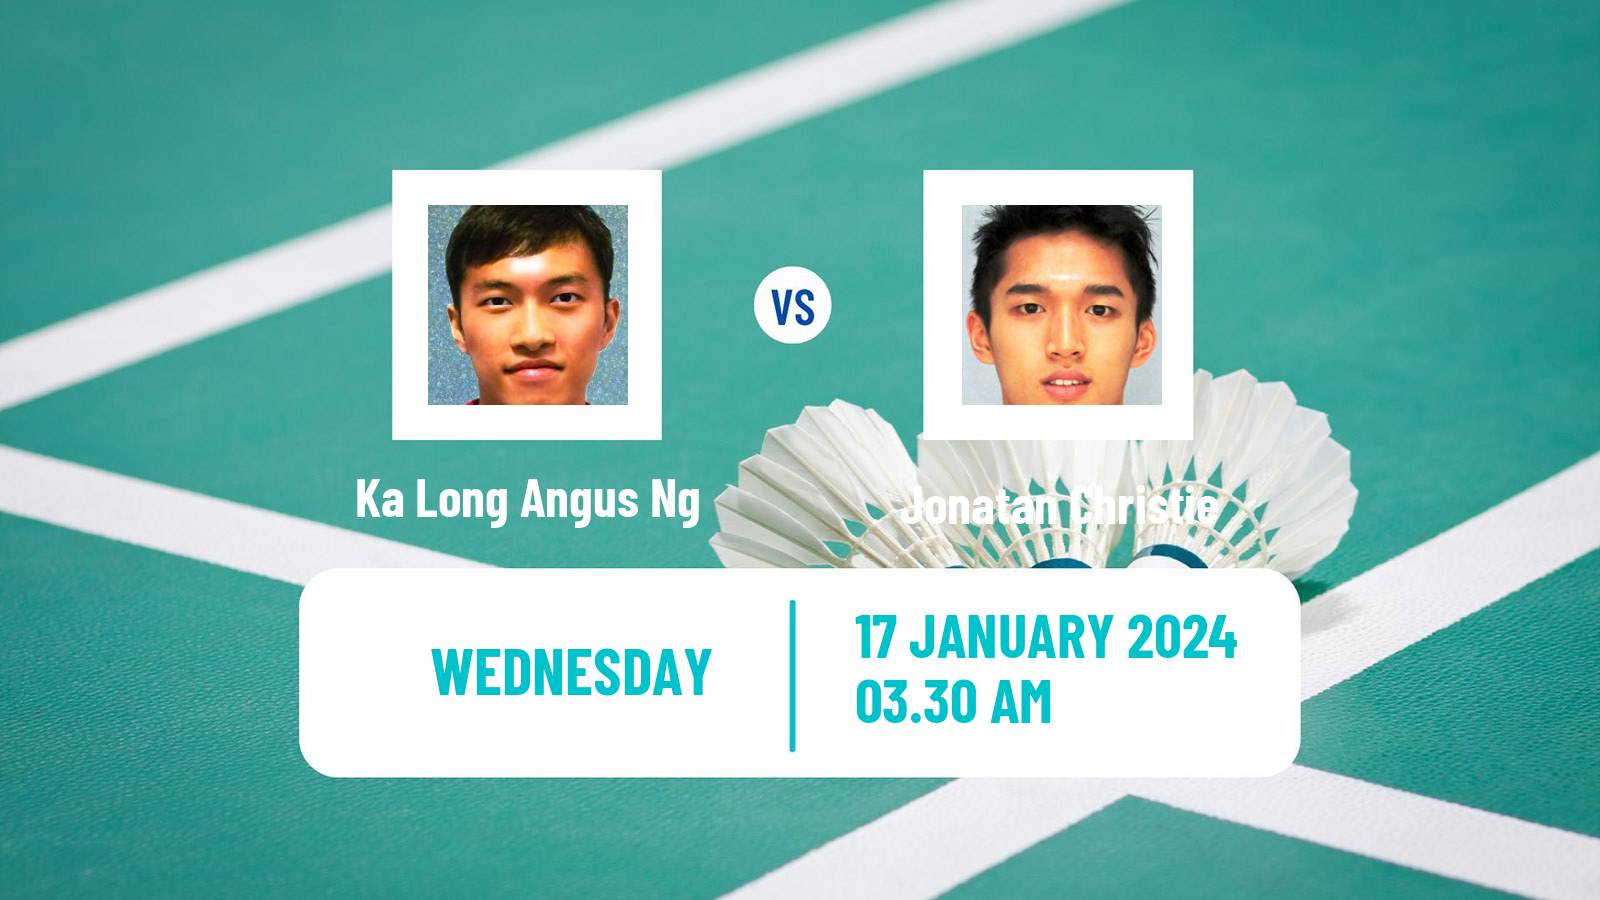 Badminton BWF World Tour India Open Men Ka Long Angus Ng - Jonatan Christie